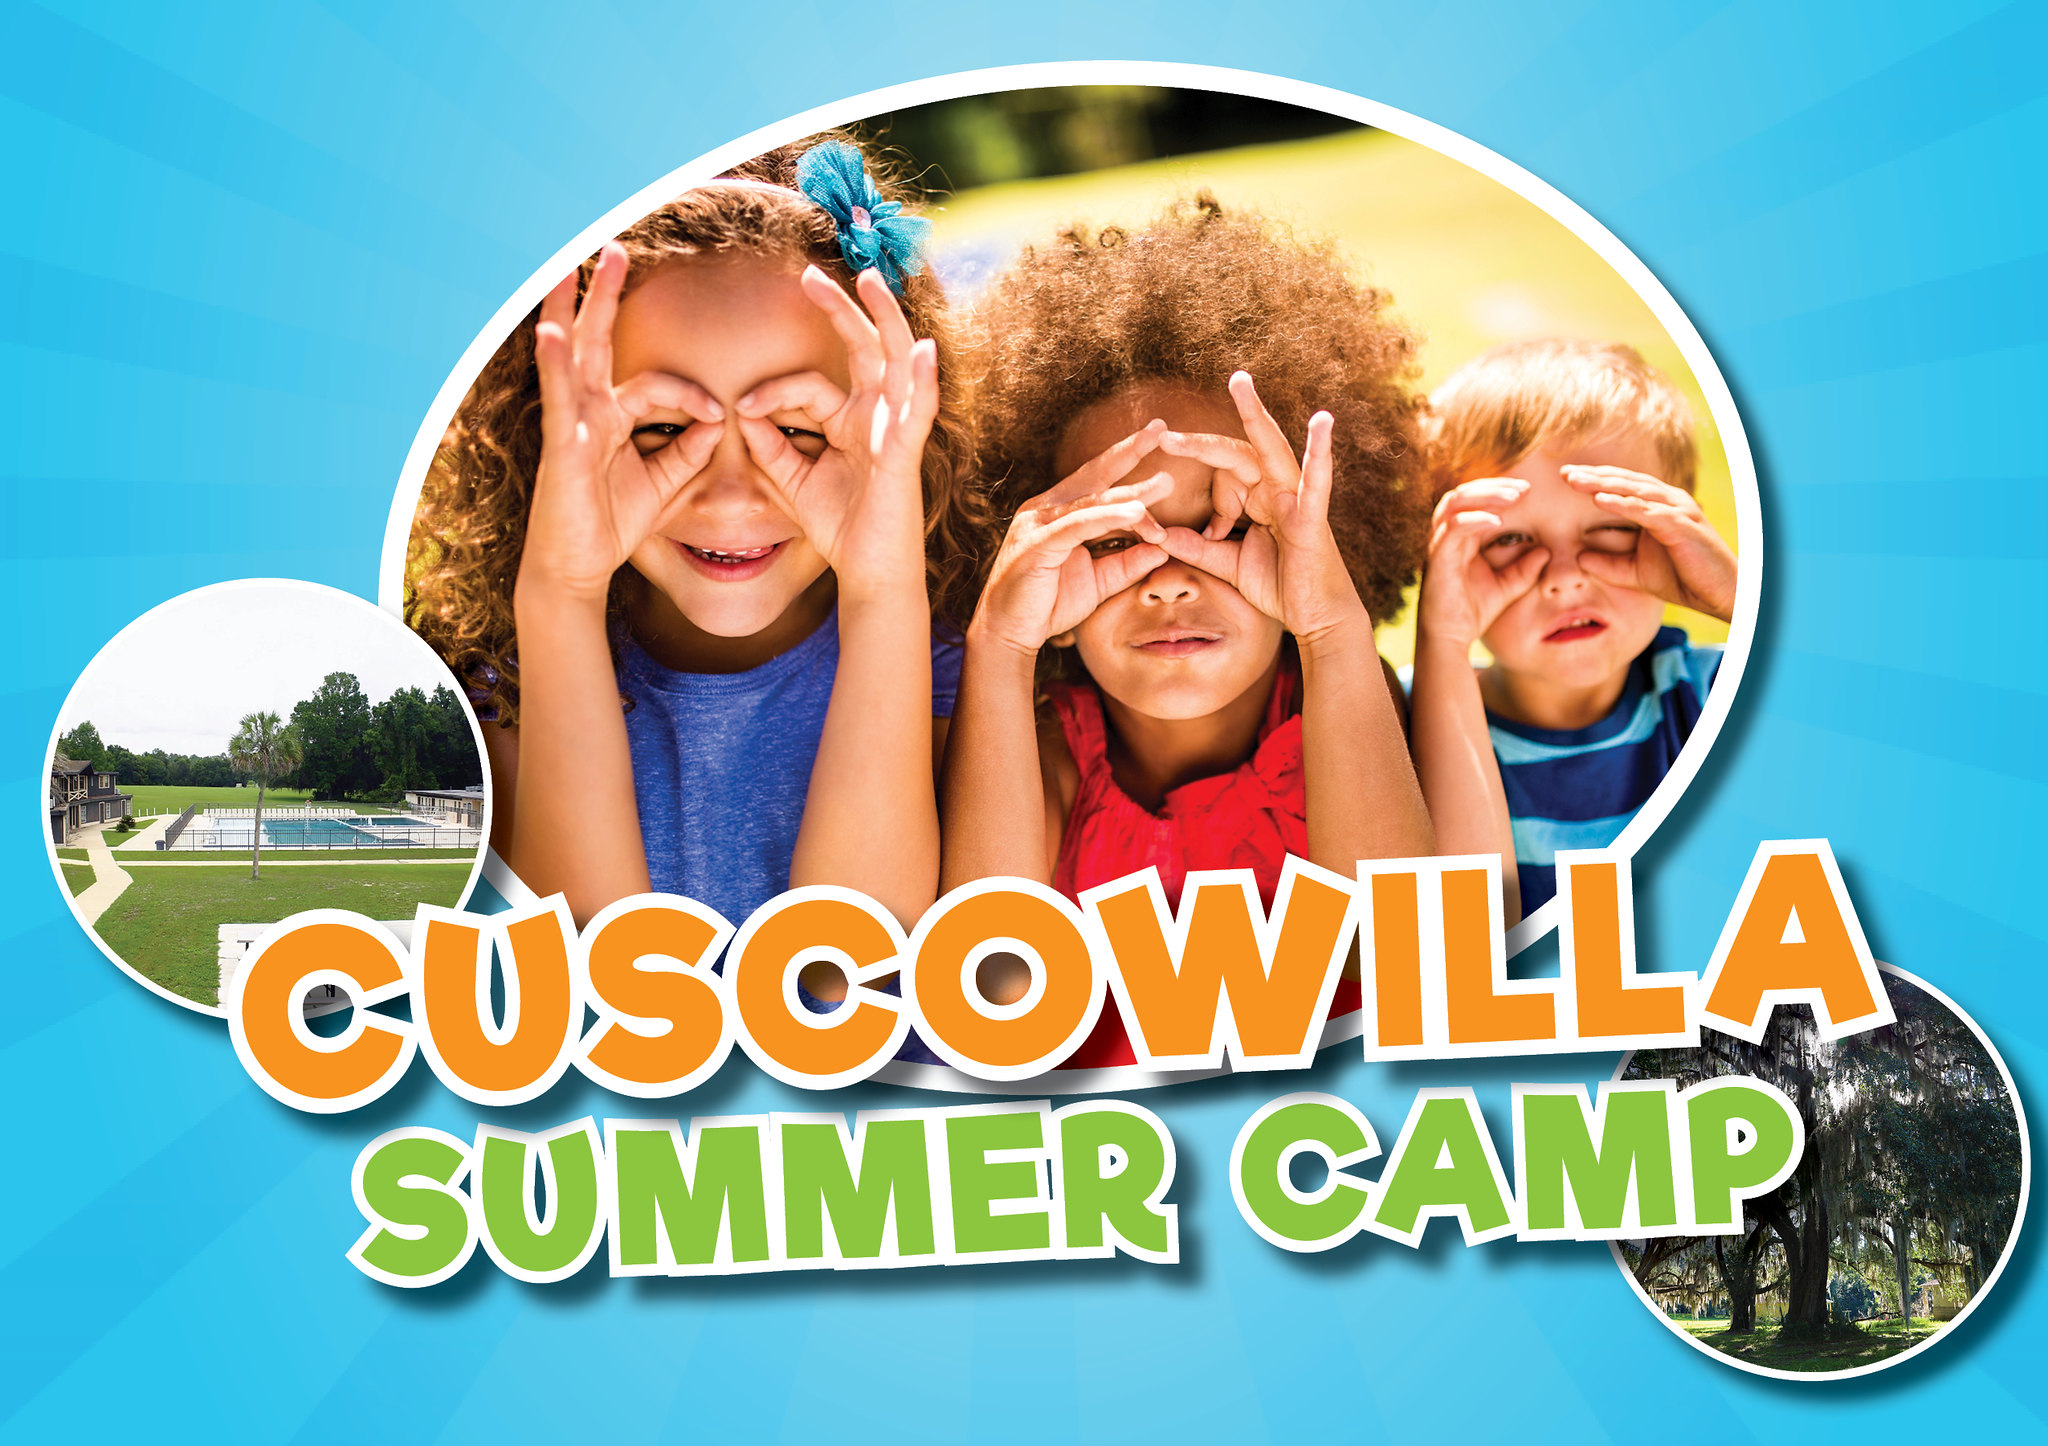 Cuscowilla Summer Camp